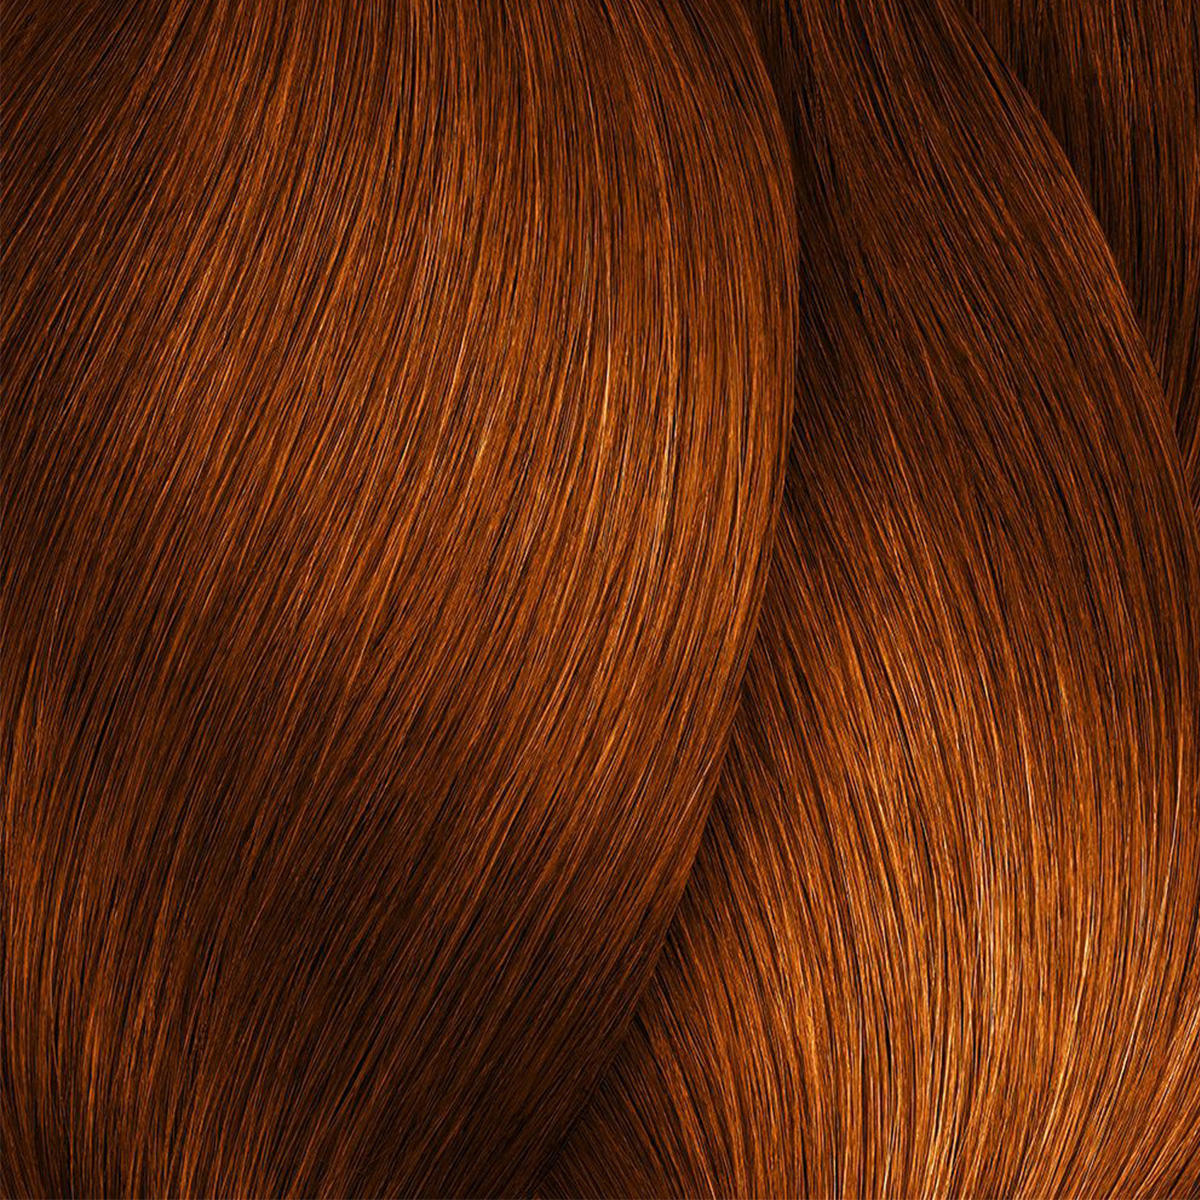 L'Oréal Professionnel Paris Coloration 6.45 Dark Blonde Copper Mahogany, Tube 60 ml - 2